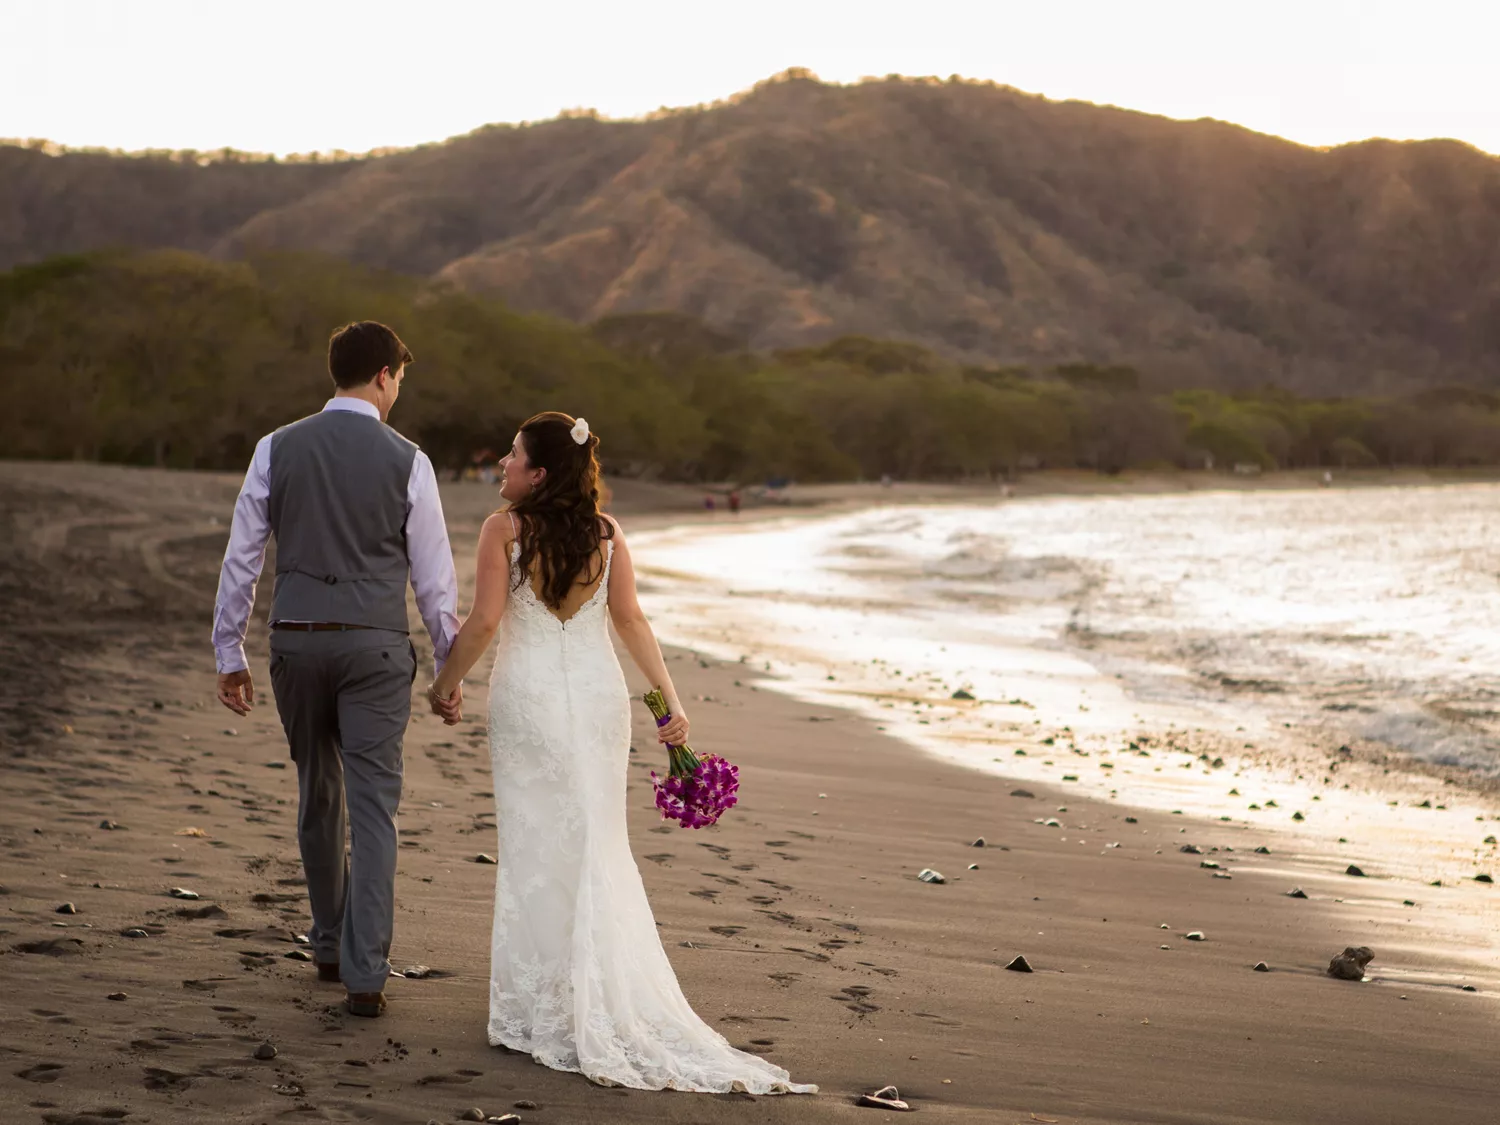 Ocean Breeze – Perfect Destination Wedding Venue in Costa Rica